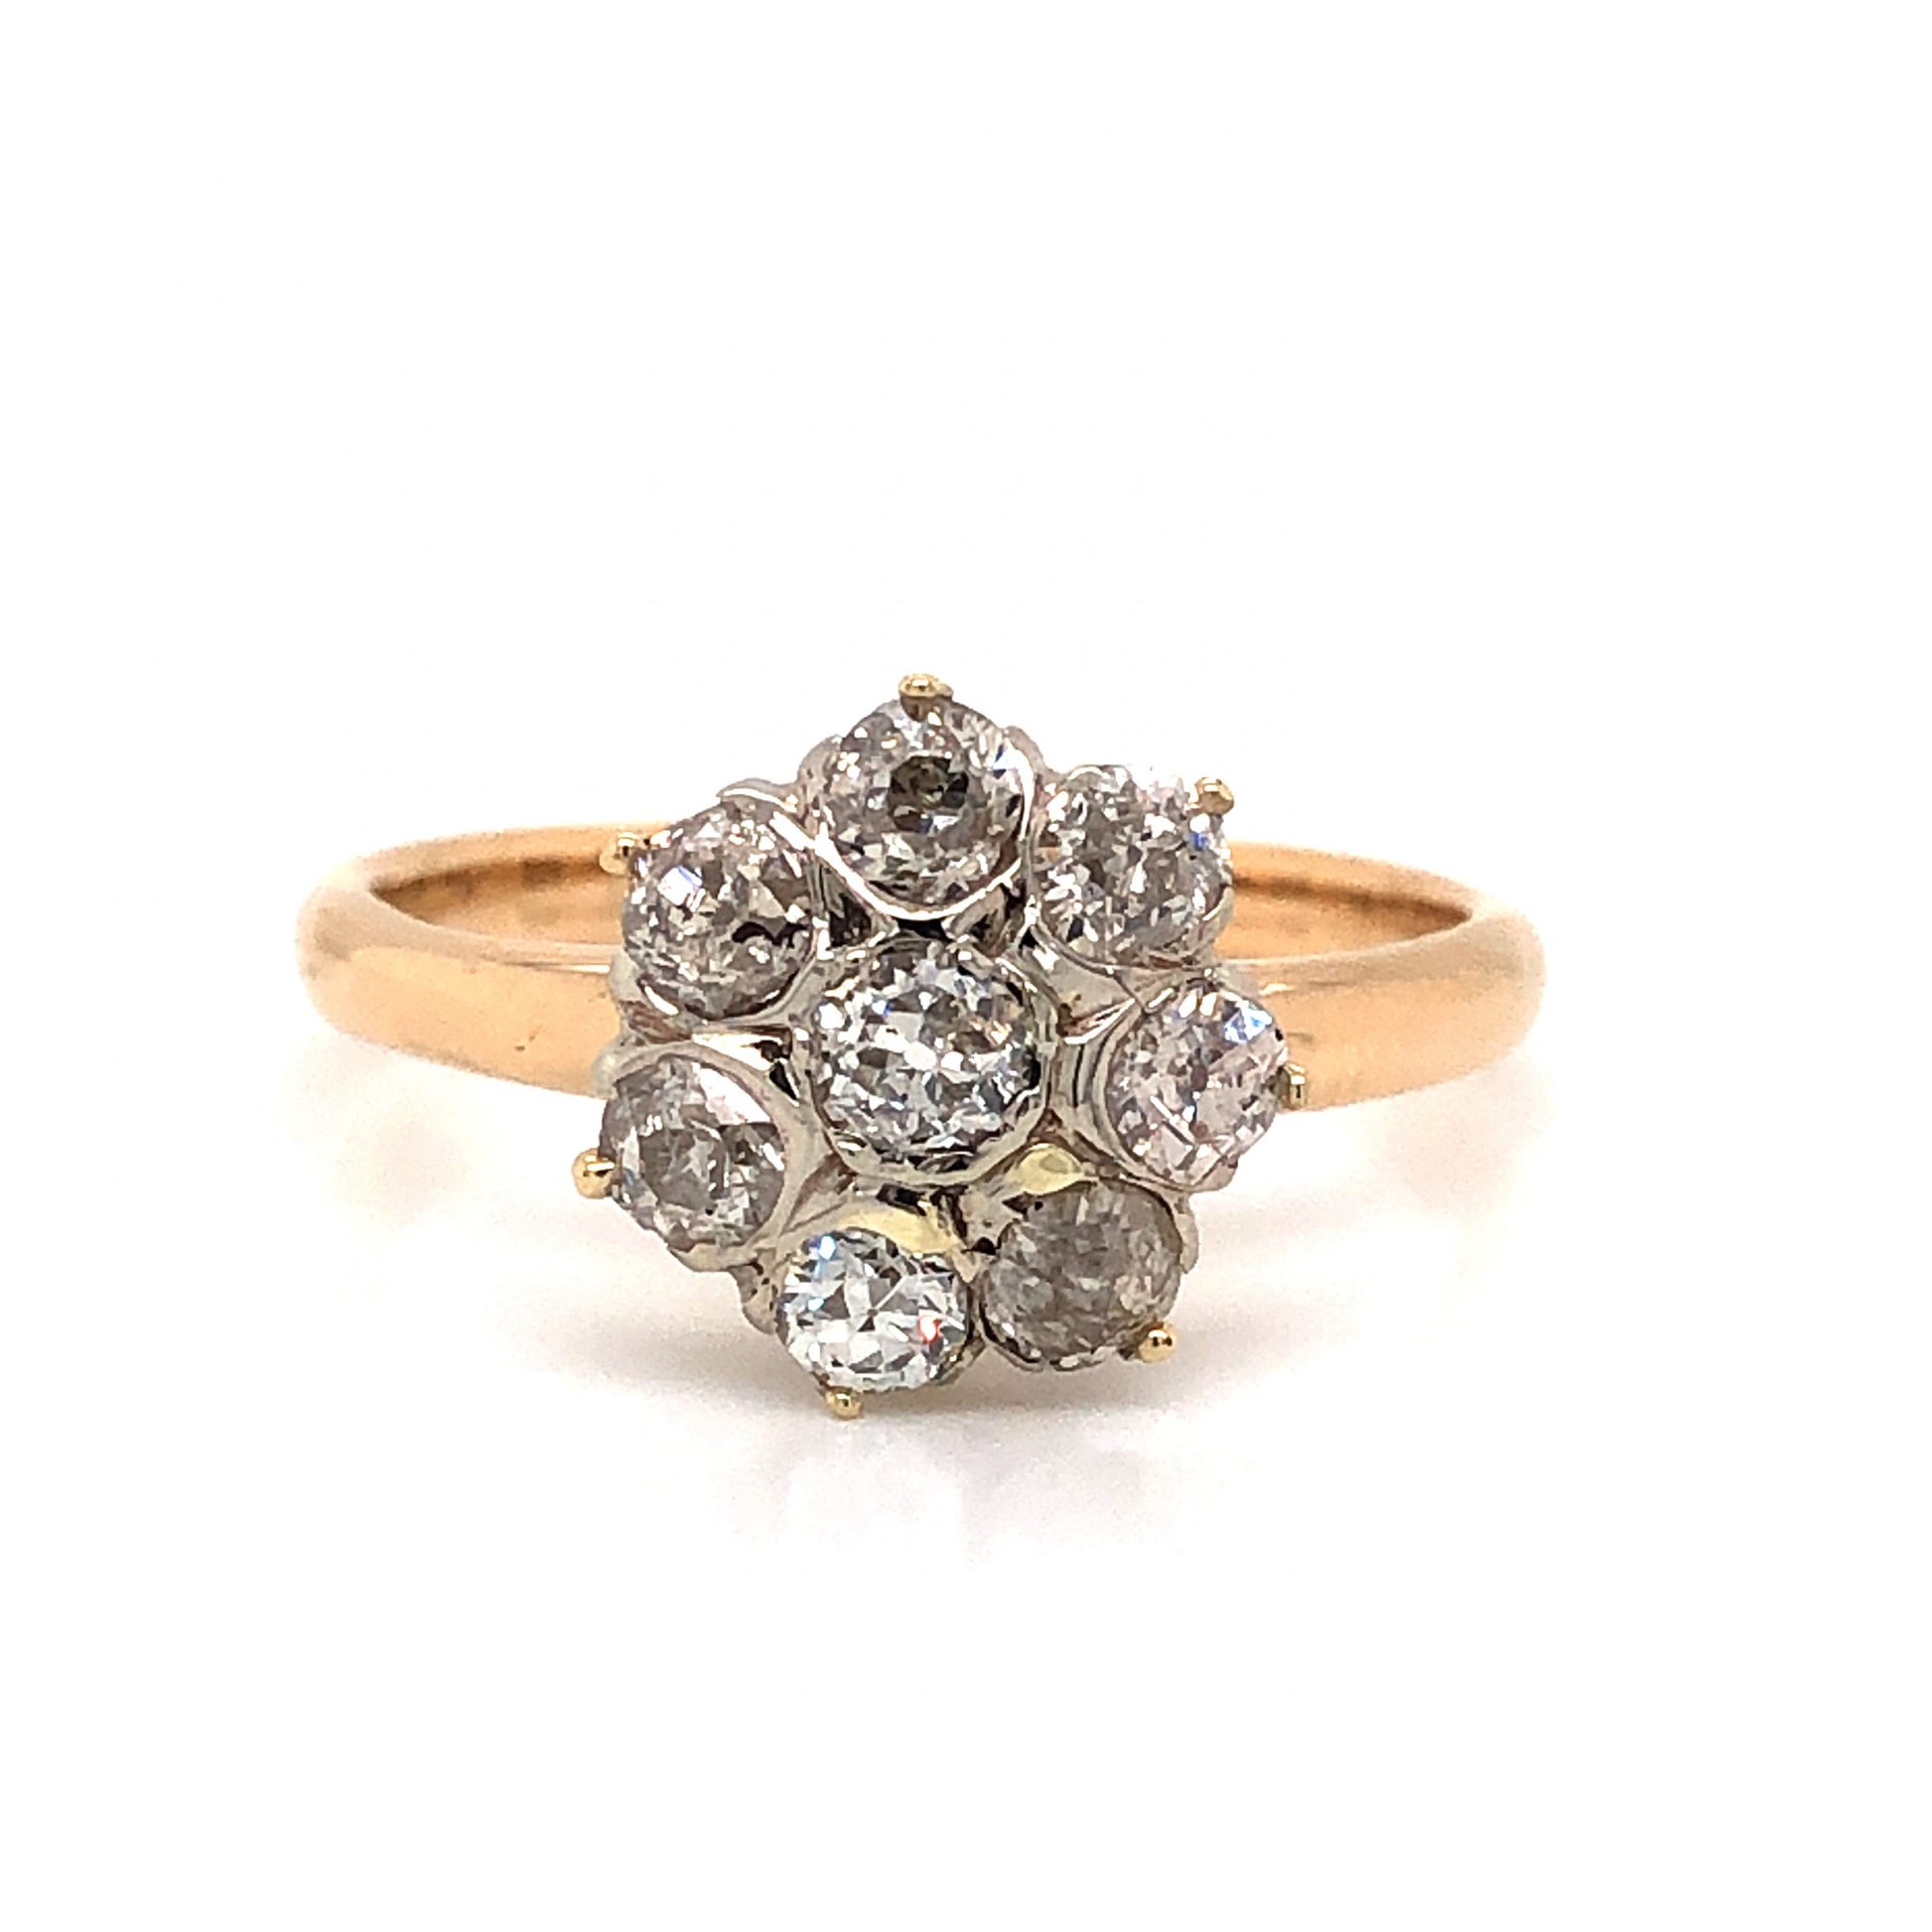 .84 Victorian Diamond Cluster Engagement Ring in 14k GoldComposition: 14 Karat White Gold/14 Karat Yellow GoldRing Size: 7.75Total Diamond Weight: .84 ctTotal Gram Weight: 2.8 g